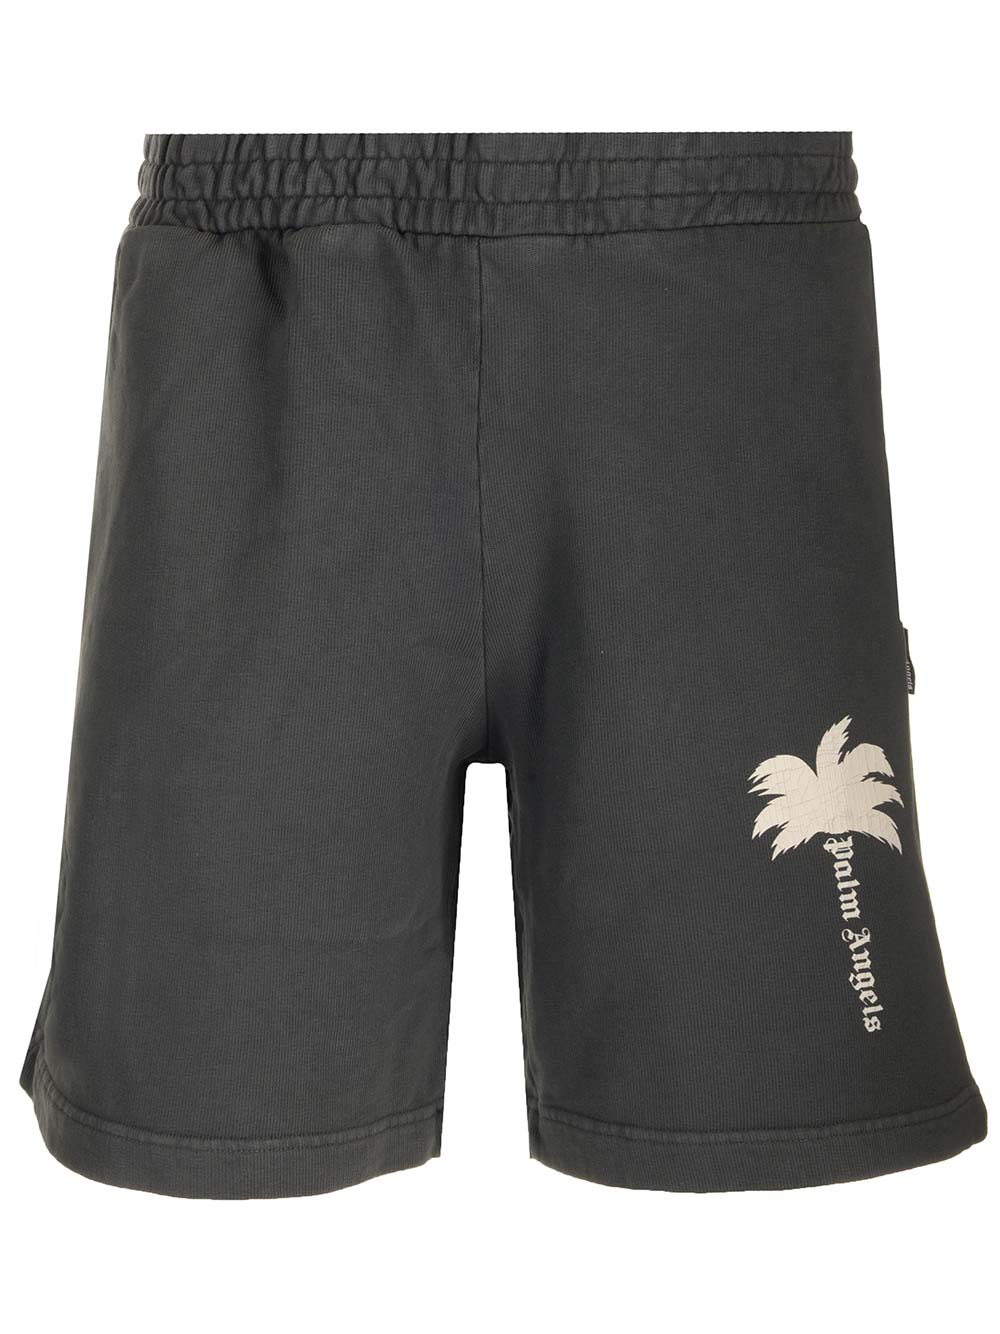 Fleece Bermuda Shorts